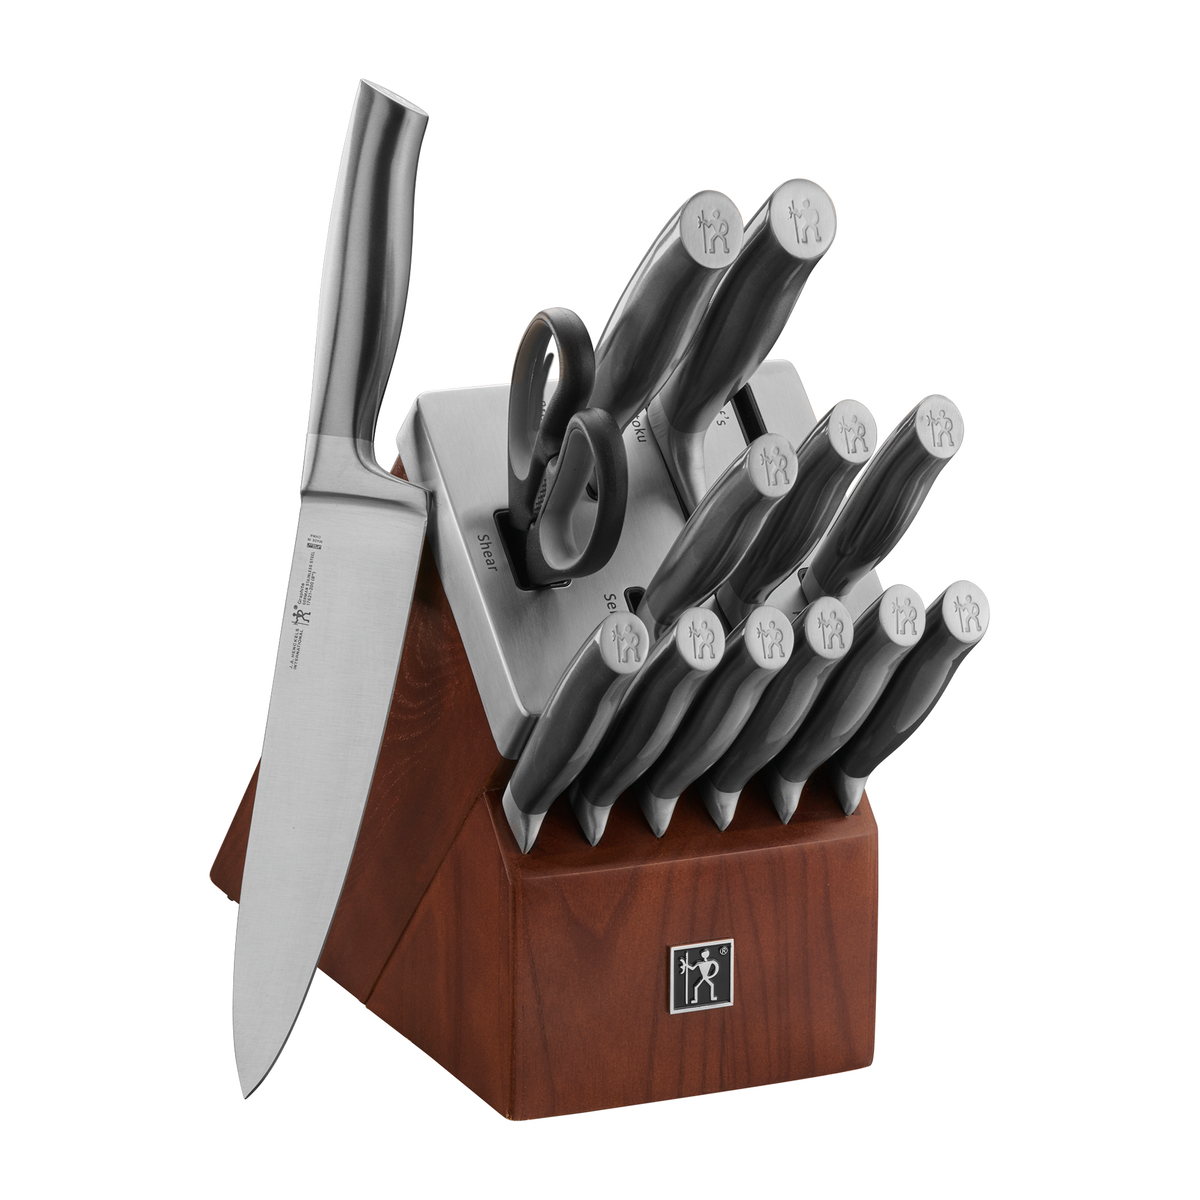 Cuisinart Nitro Sharpening 13-pc. Knife Block Set